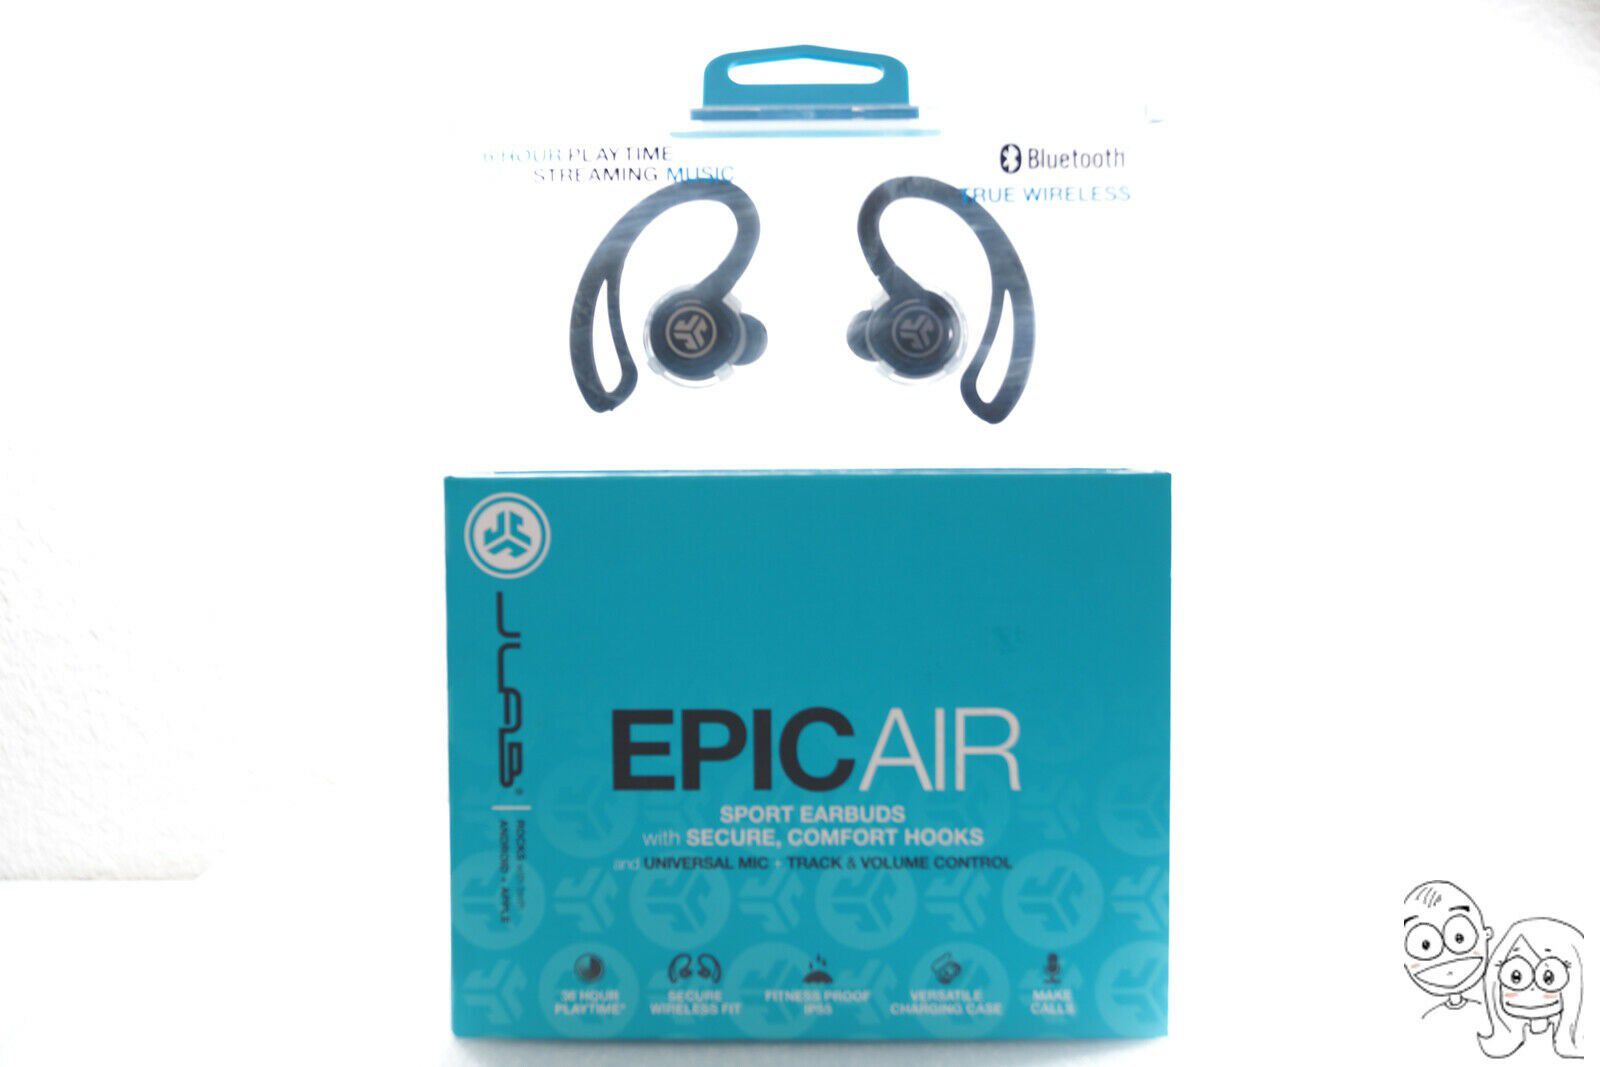 JLab Audio Epic Air True Wireless Bluetooth Earbud Headphones - Black